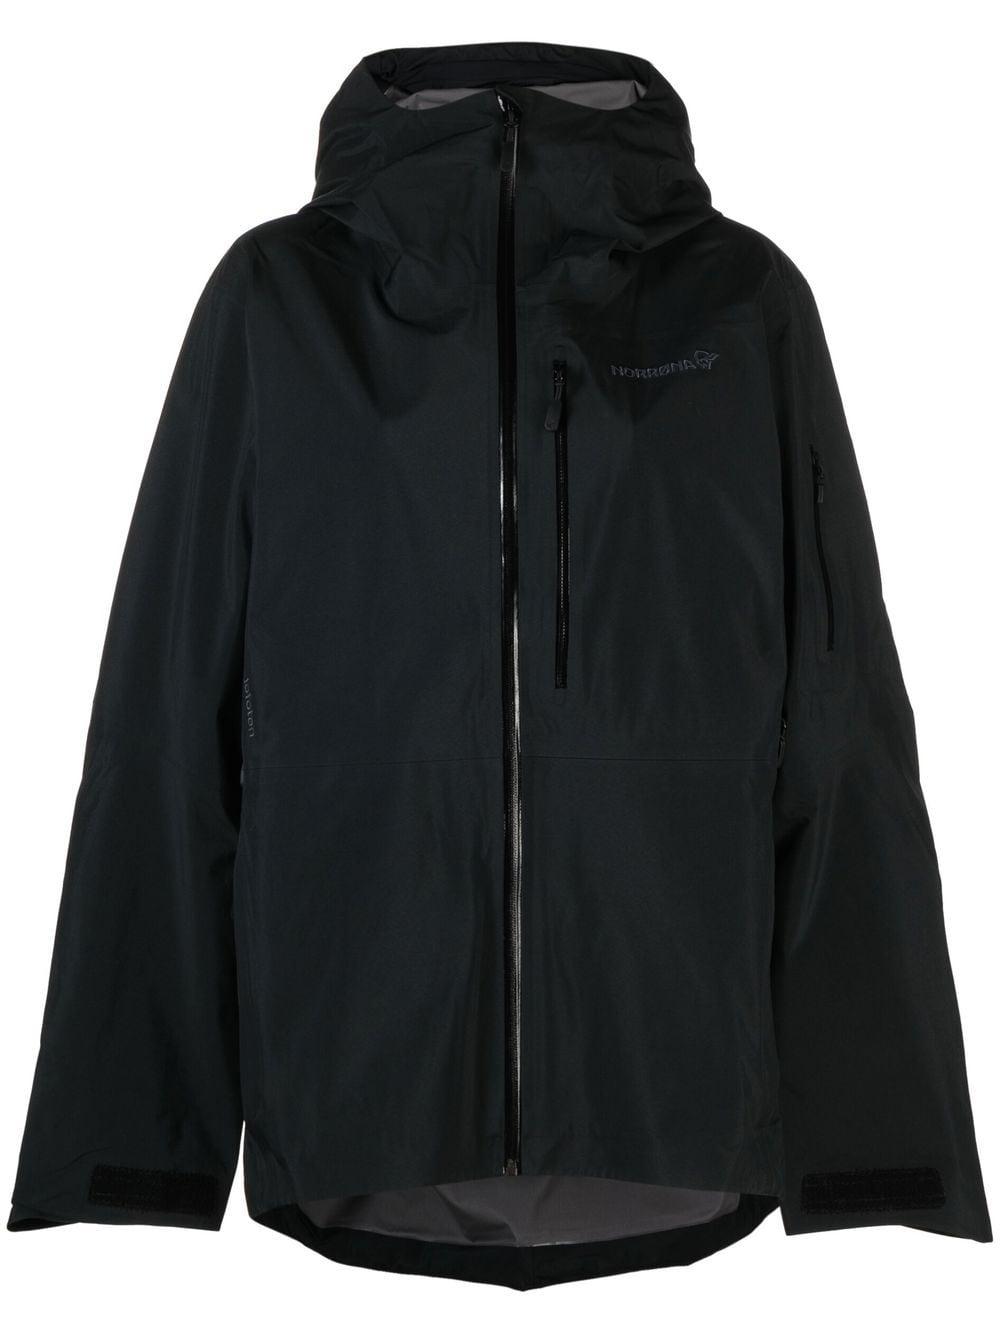 NORRØNA Gore-tex Pro Plus Jacket in Black for Men | Lyst